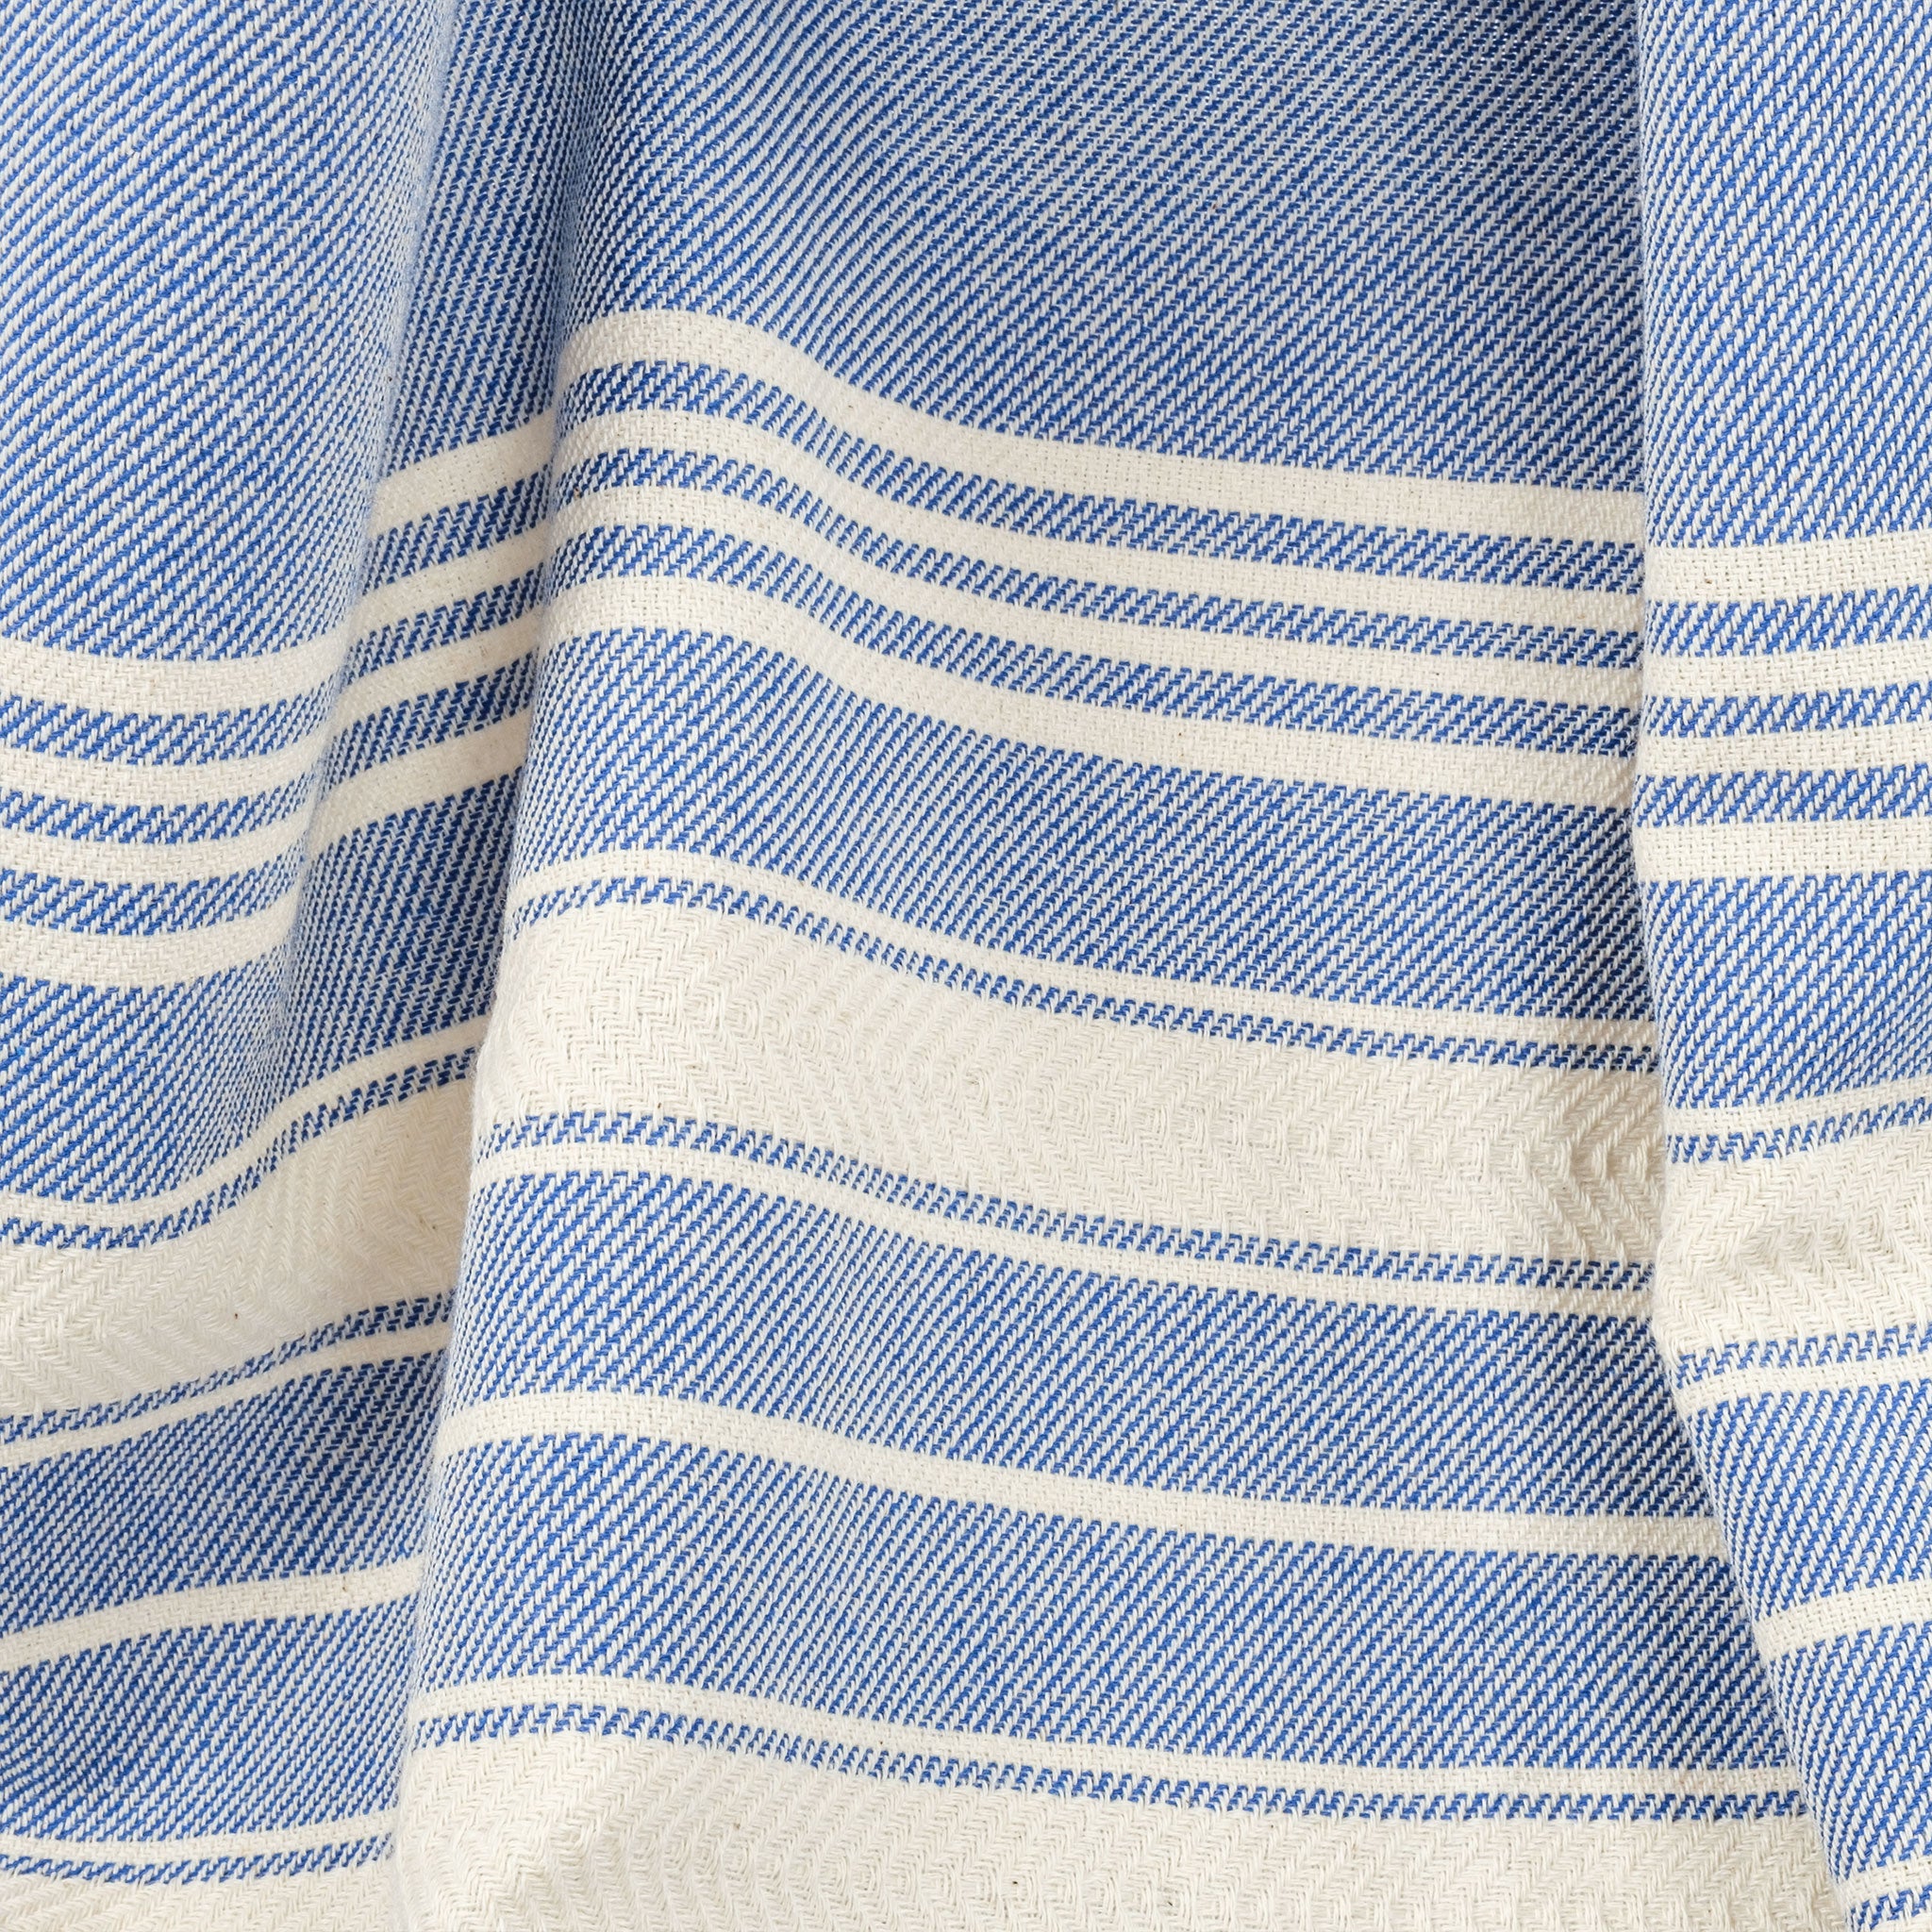 American Soft Linen - 100% Cotton Turkish Peshtemal Towels 40x70 Inches - Blue - 2